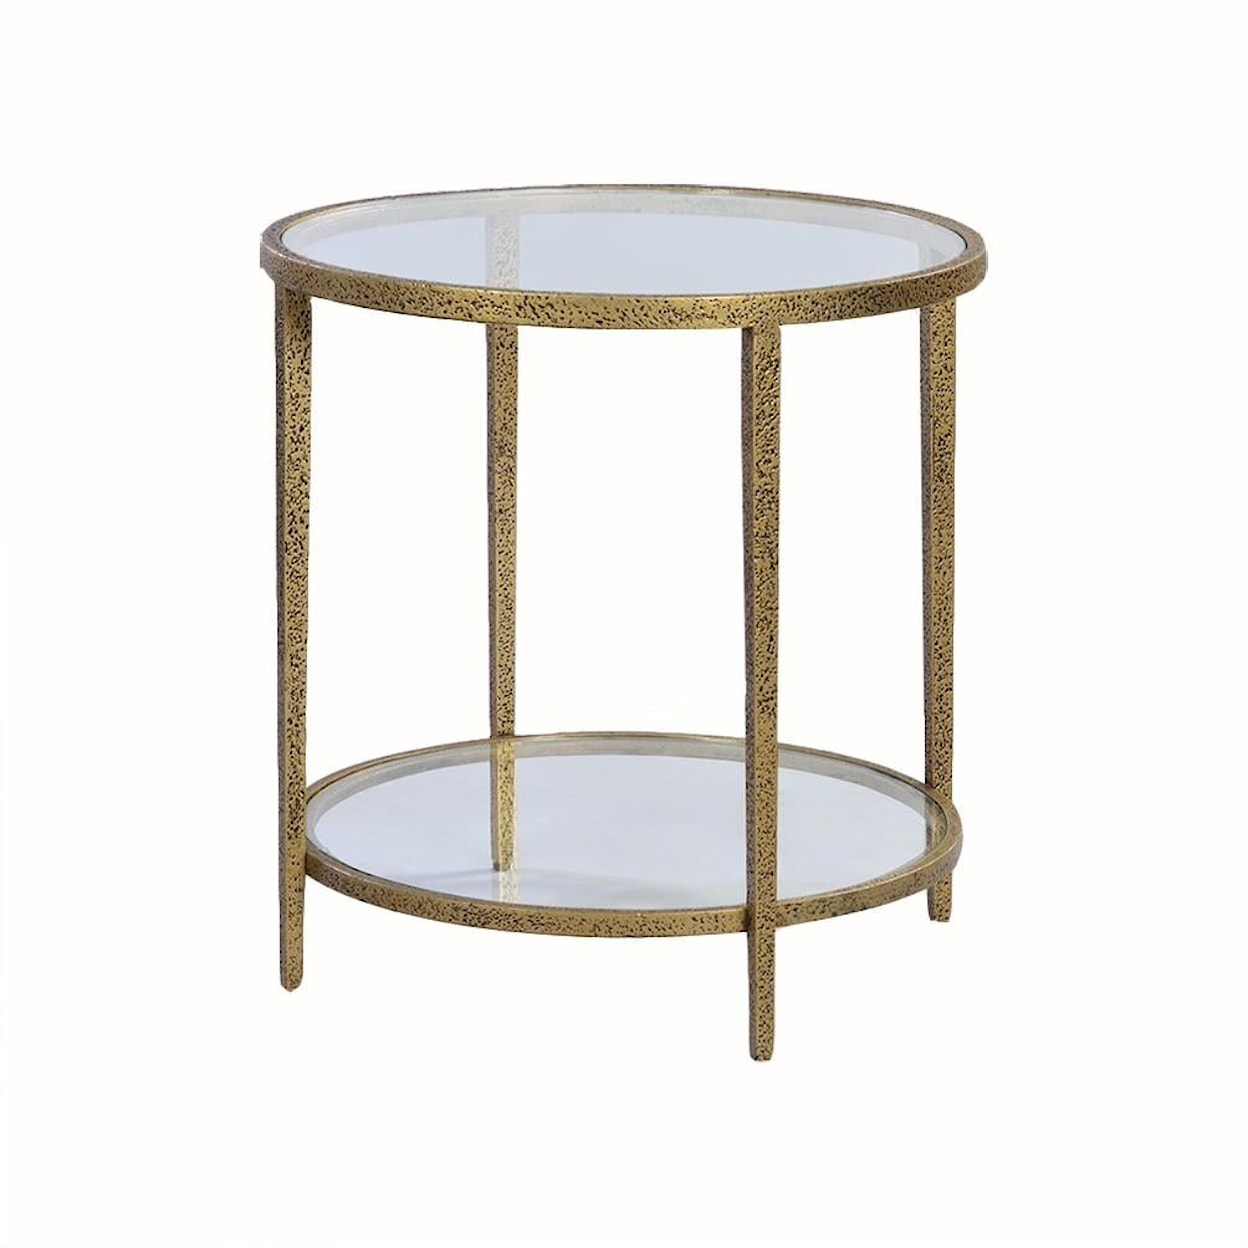 Oliver Home Furnishings End/ Side Tables ROUND GOLD LEAF SIDE TABLE